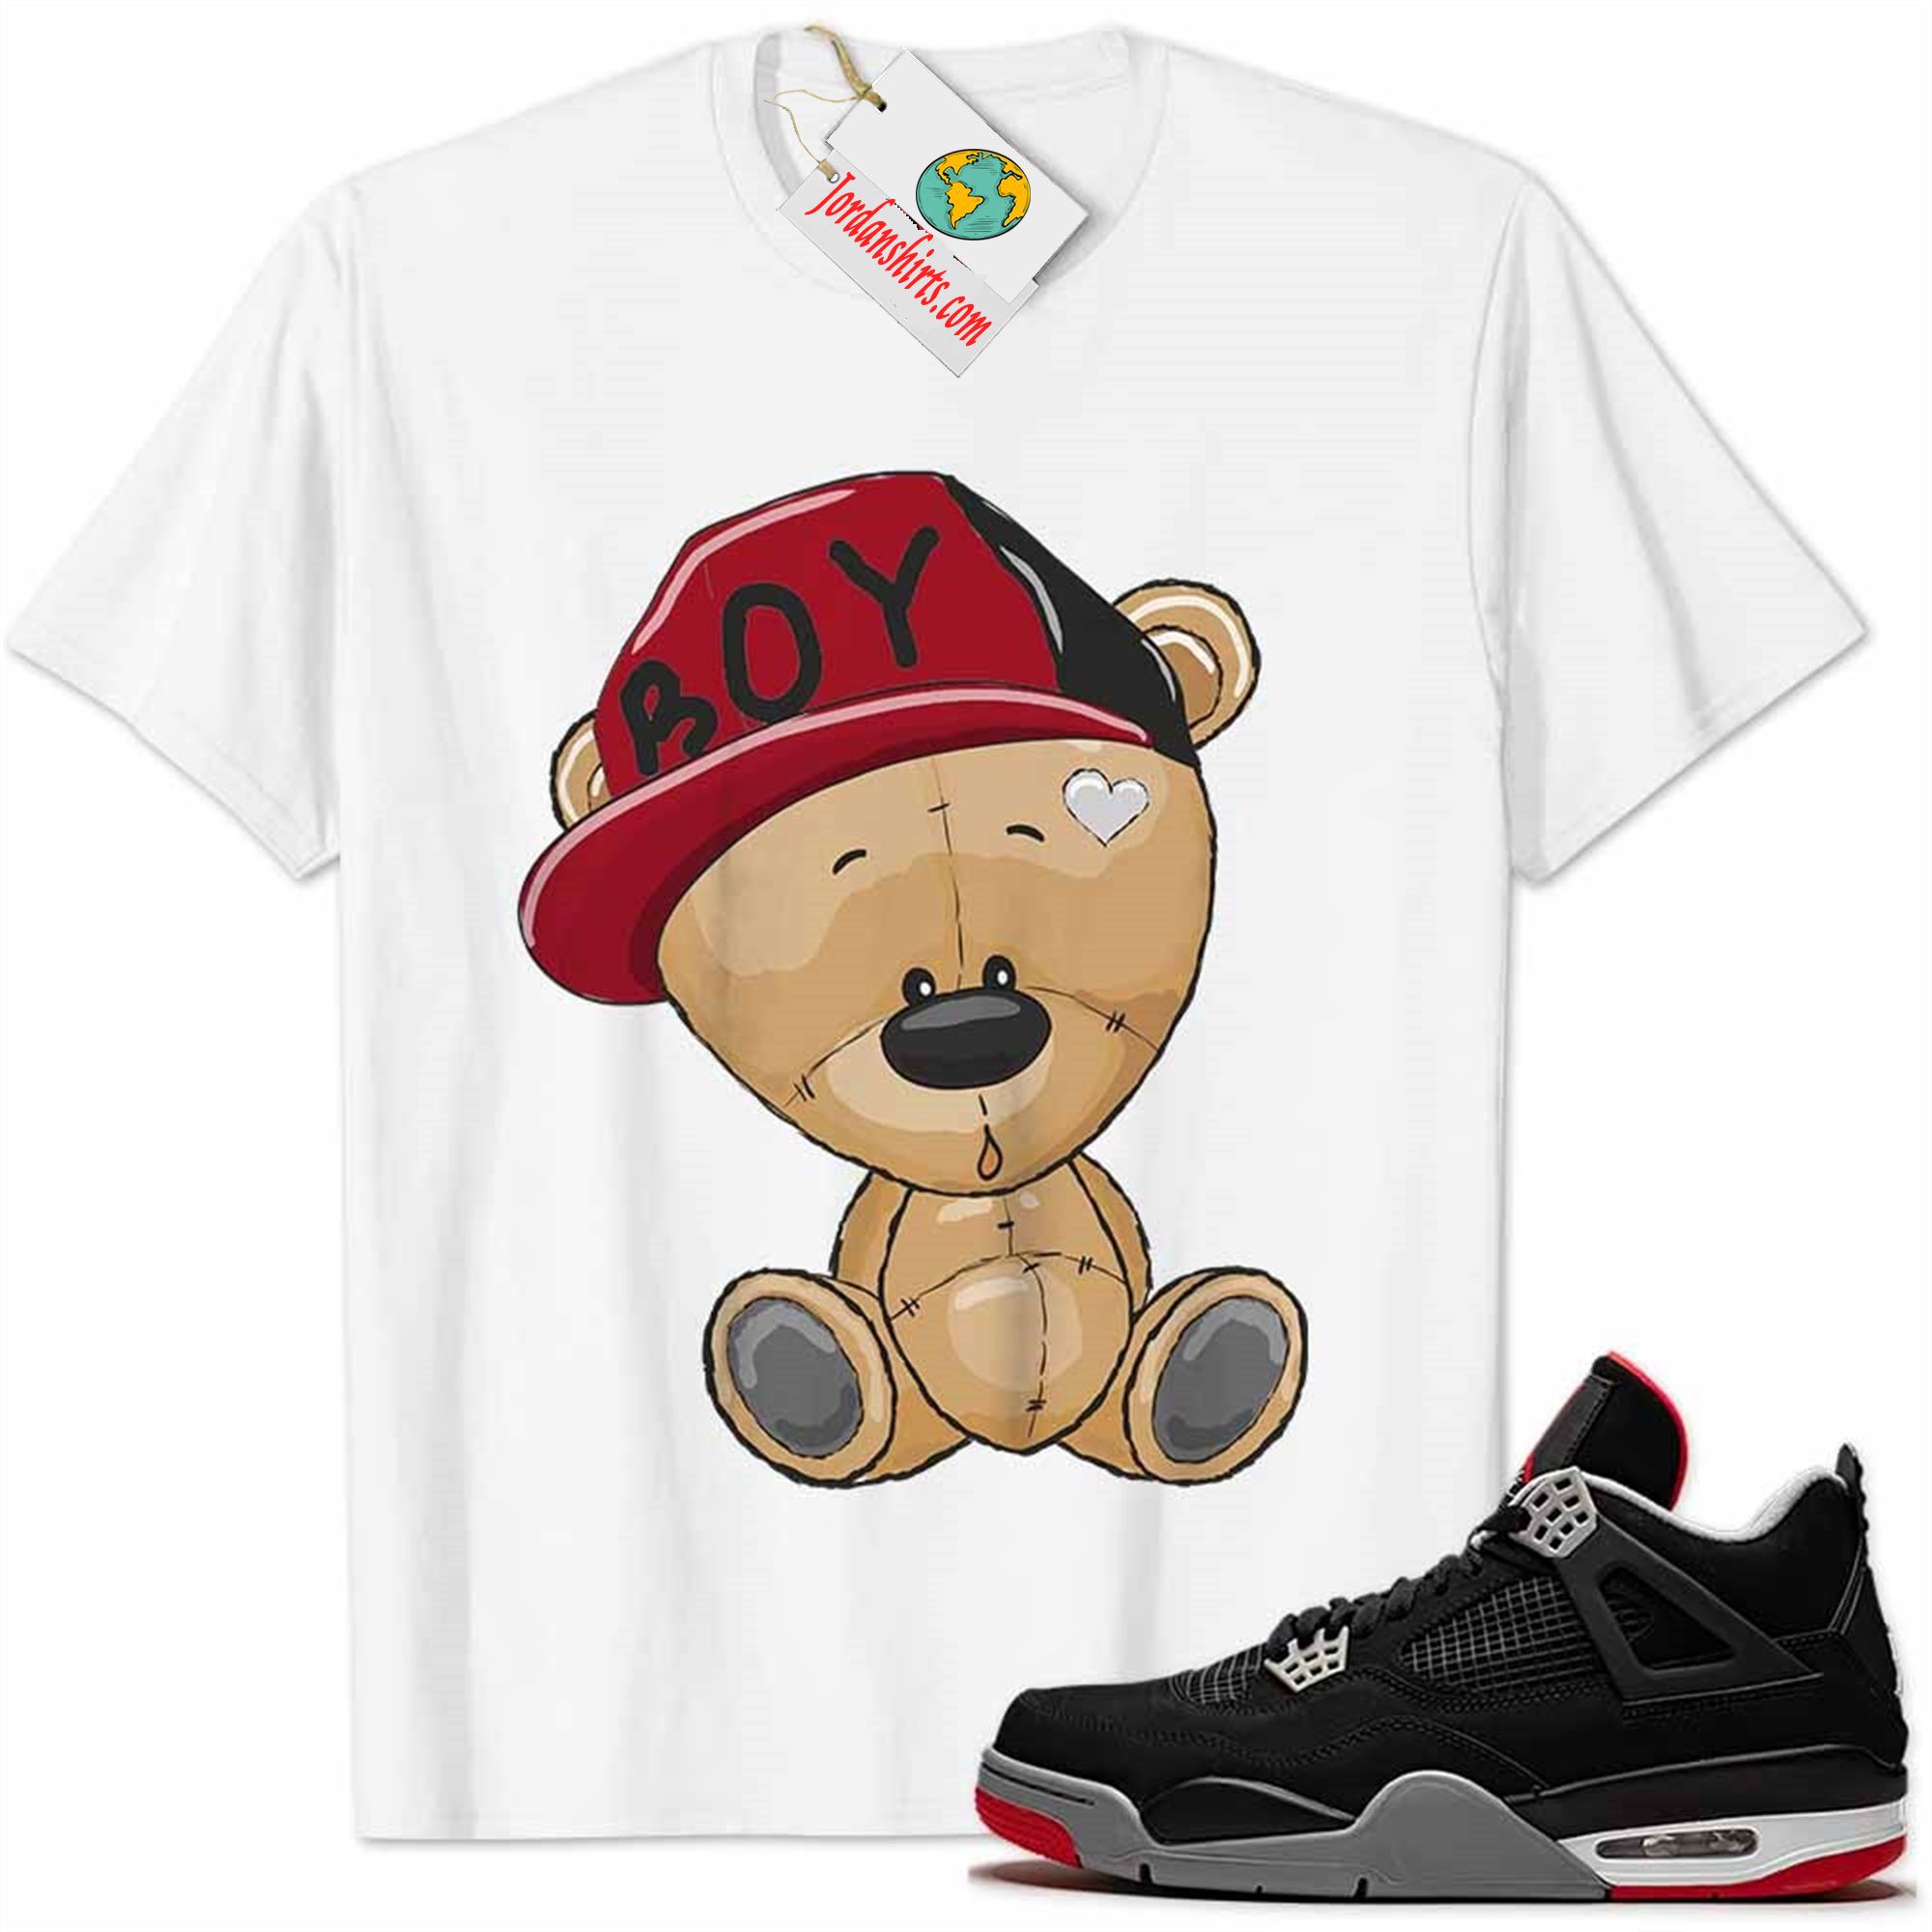 Jordan 4 Shirt, Jordan 4 Bred Shirt Cute Baby Teddy Bear White Size Up To 5xl